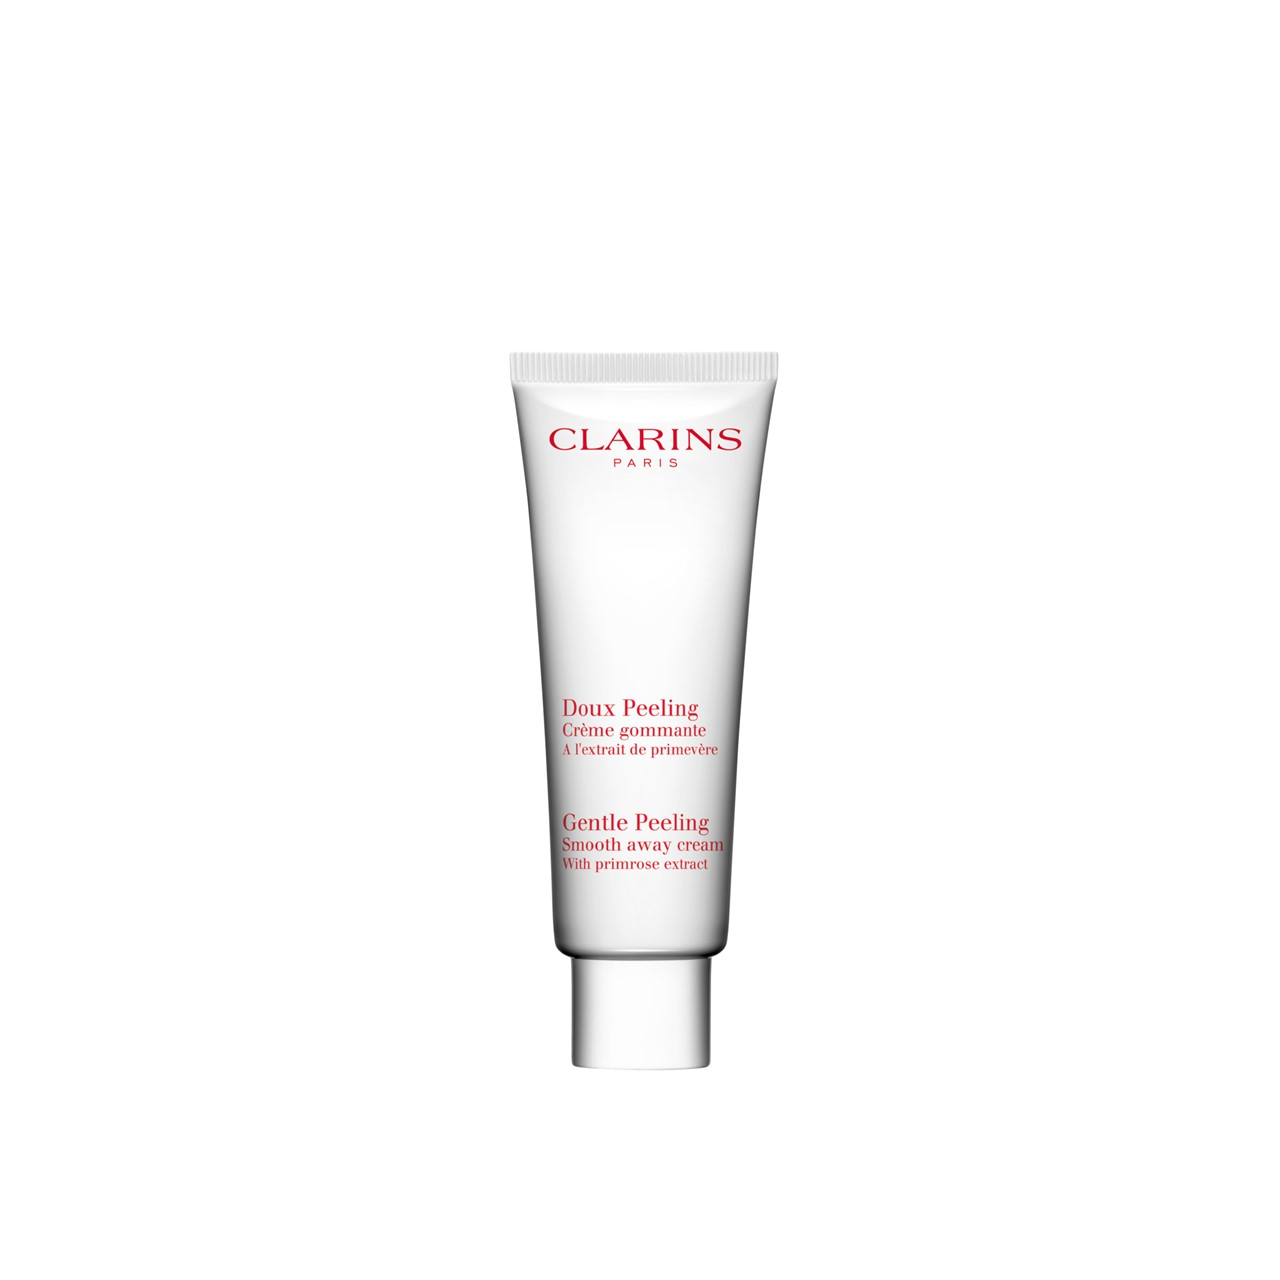 Clarins Gentle Peeling Smooth Away Cream 50ml (1.69fl.oz.)